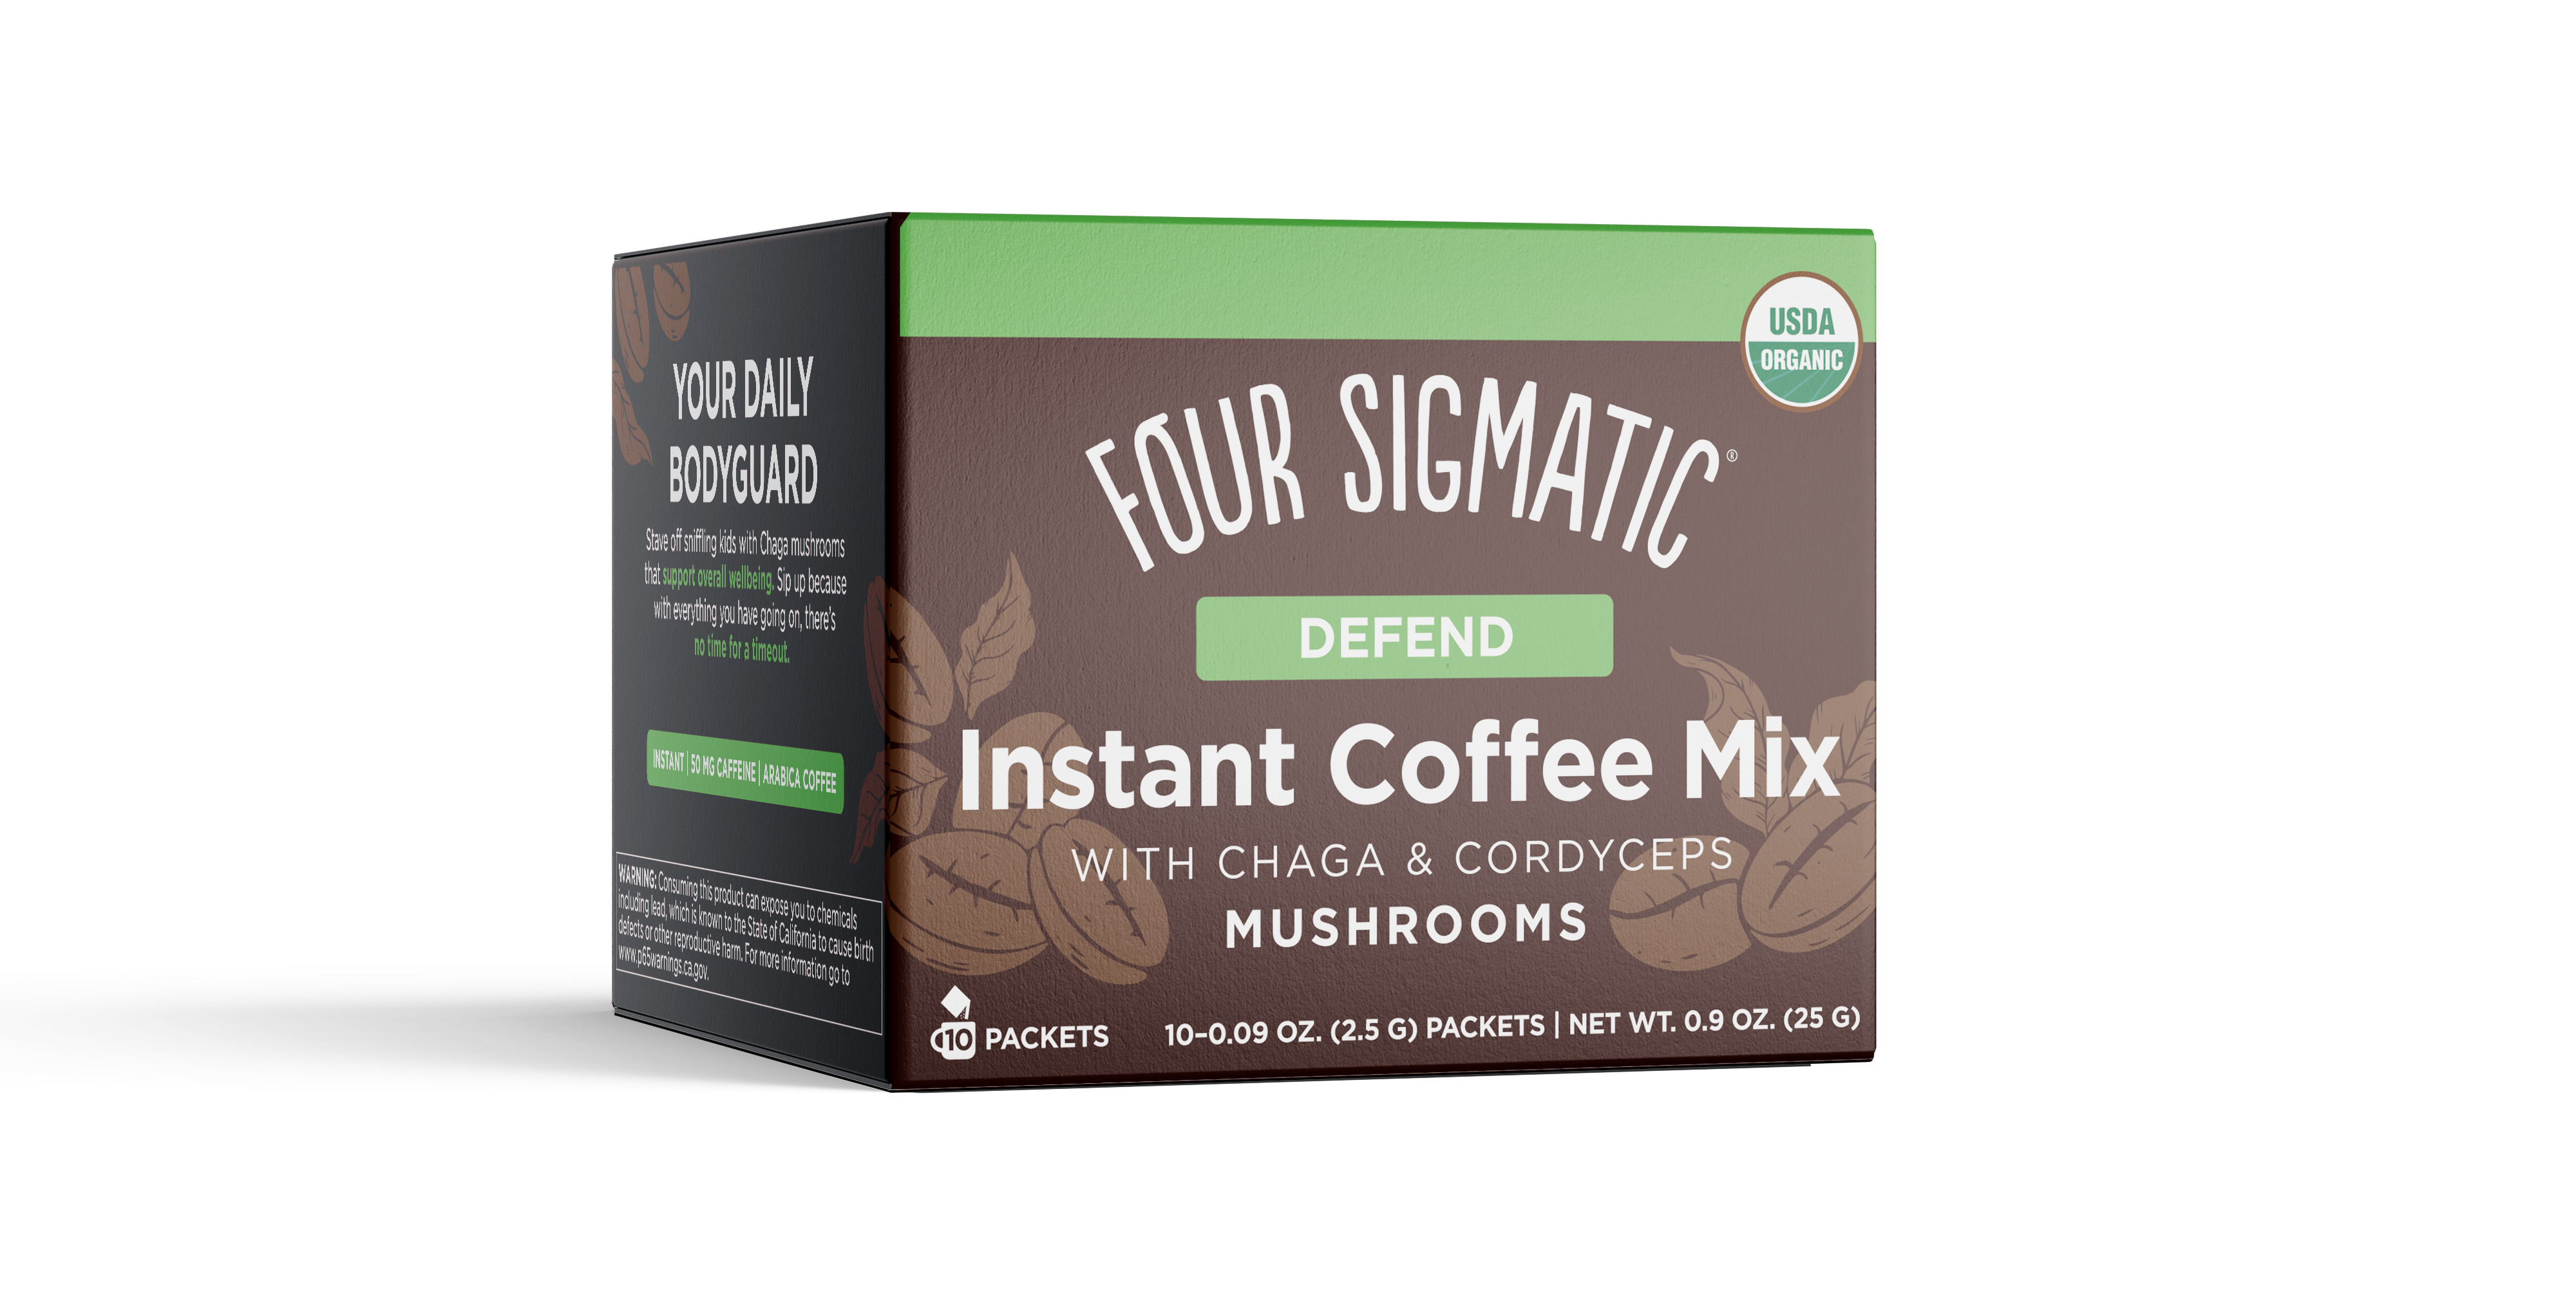 Defend Mushroom Coffee Mix with Chaga 144 units per case 0.1 oz